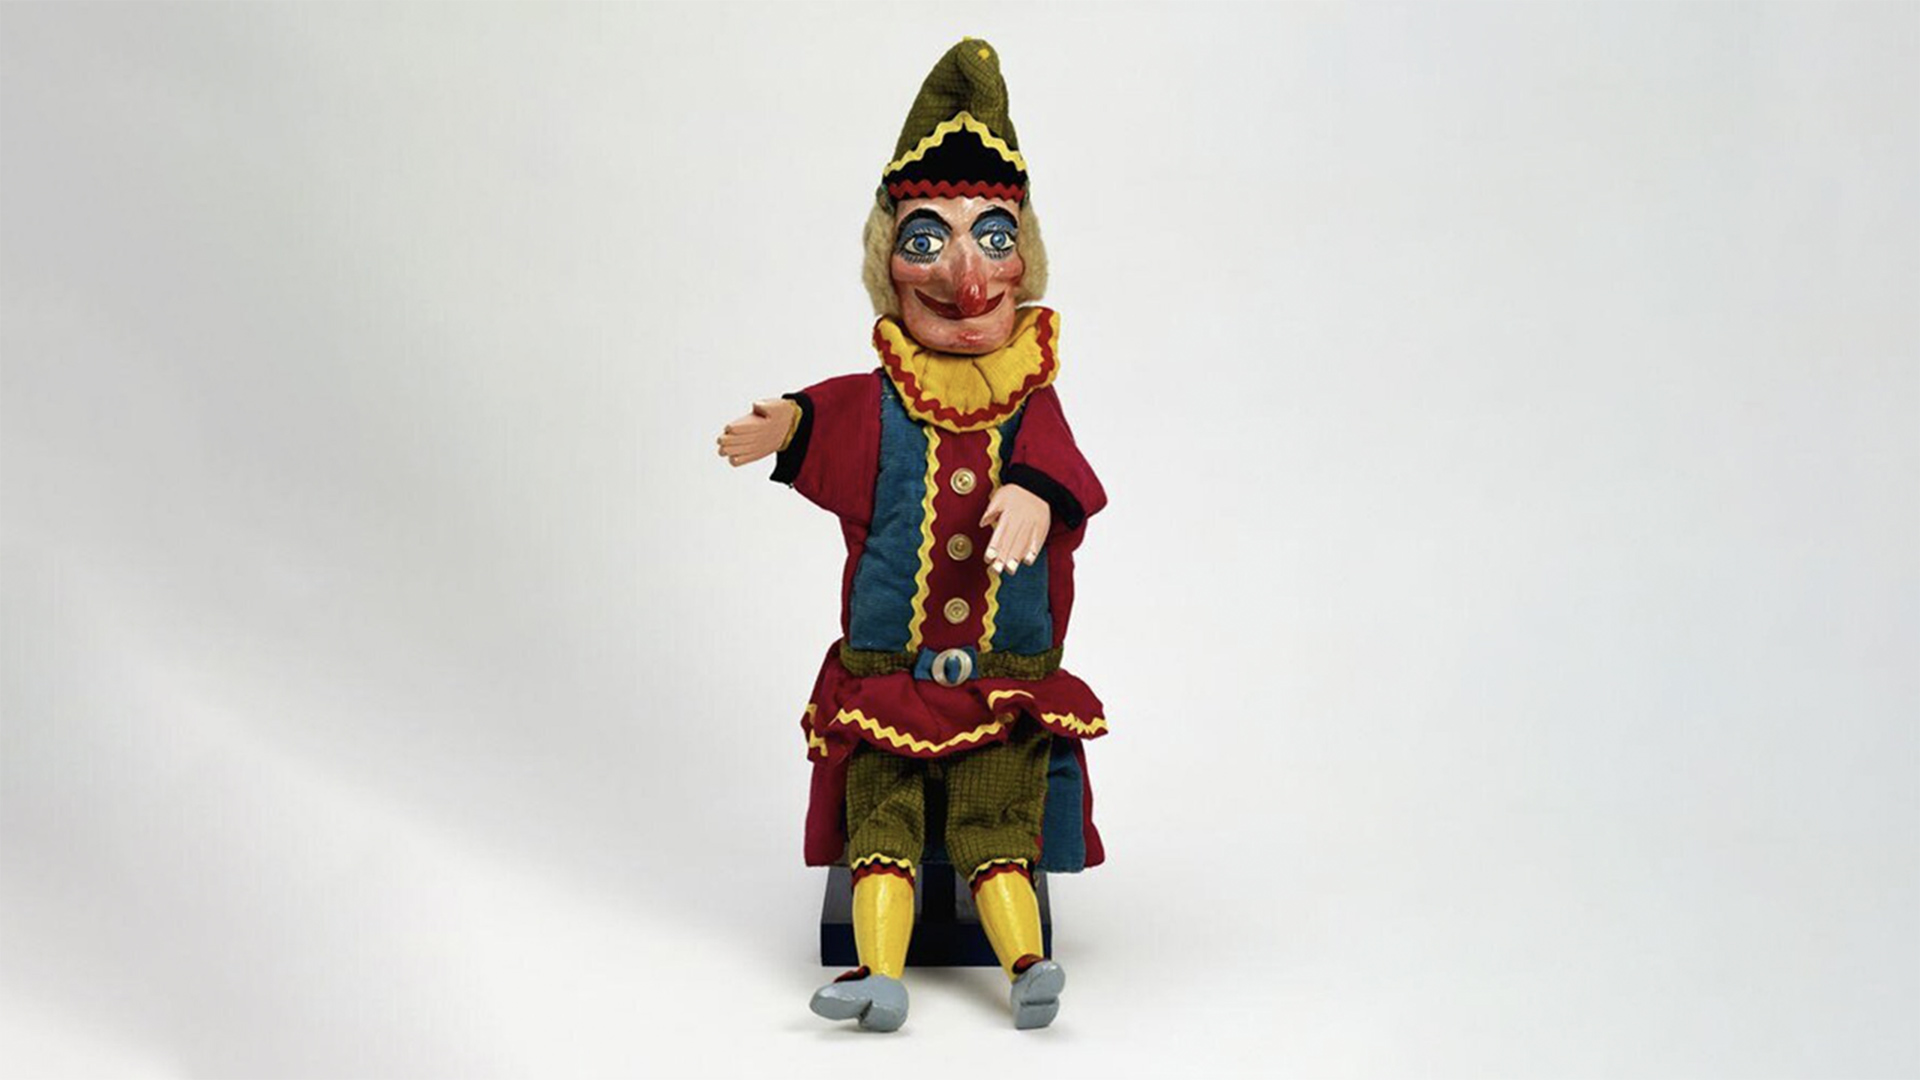 Wooden glove puppet of Mr Punch